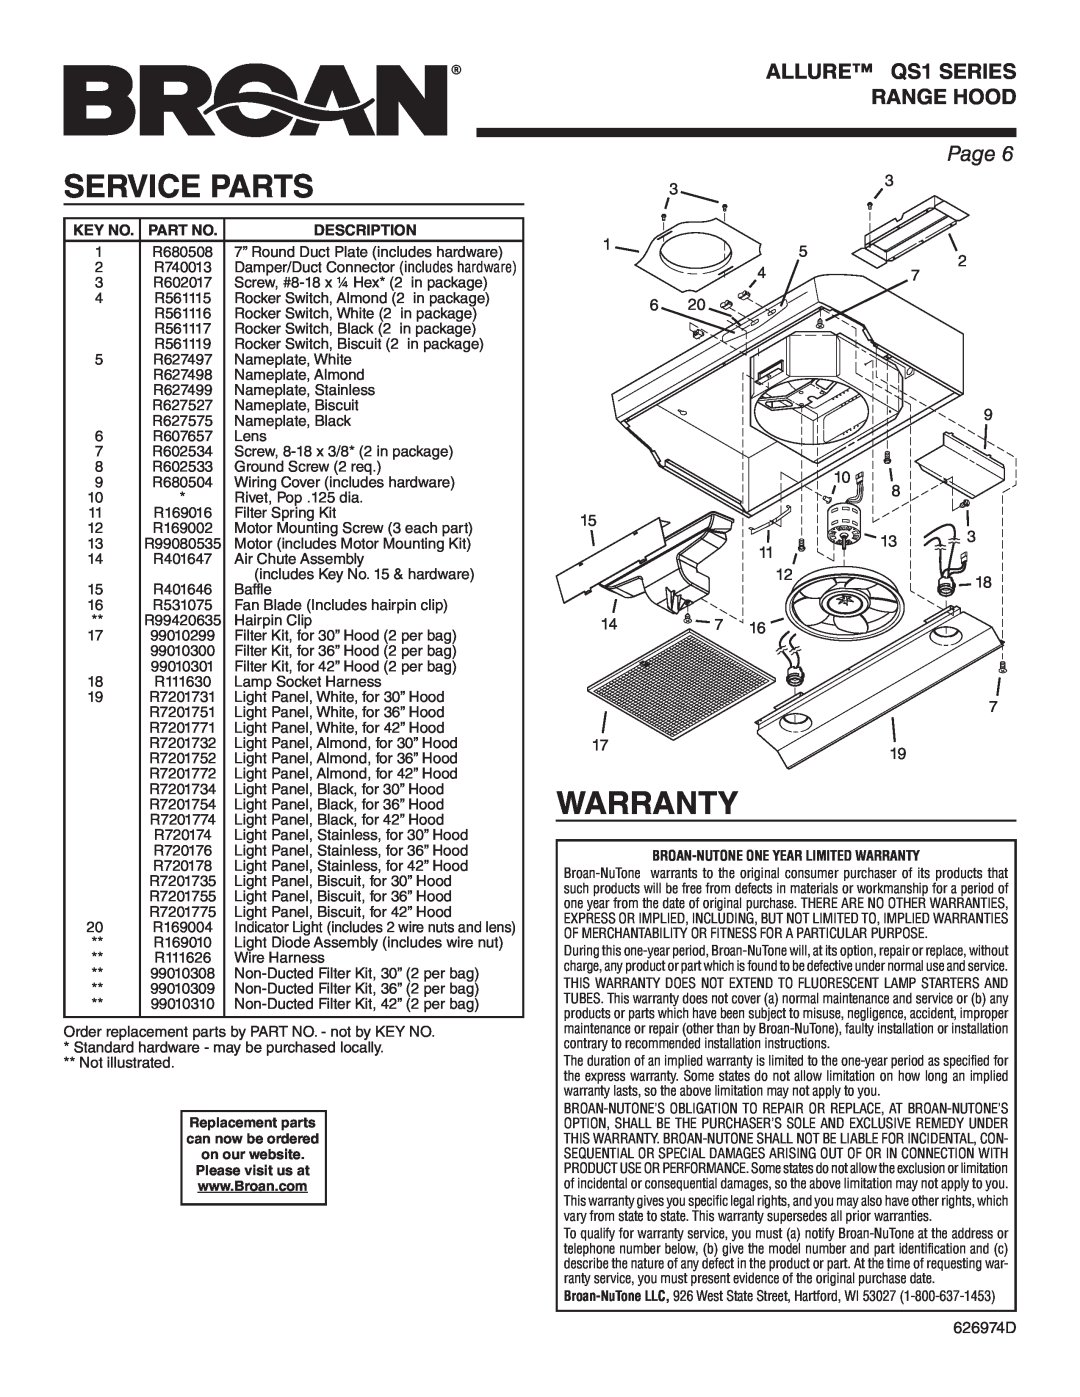 Broan QS130BL warranty Service Parts, Warranty, ALLURE QS1 SERIES RANGE HOOD, Page, Key No. Part No, Description 